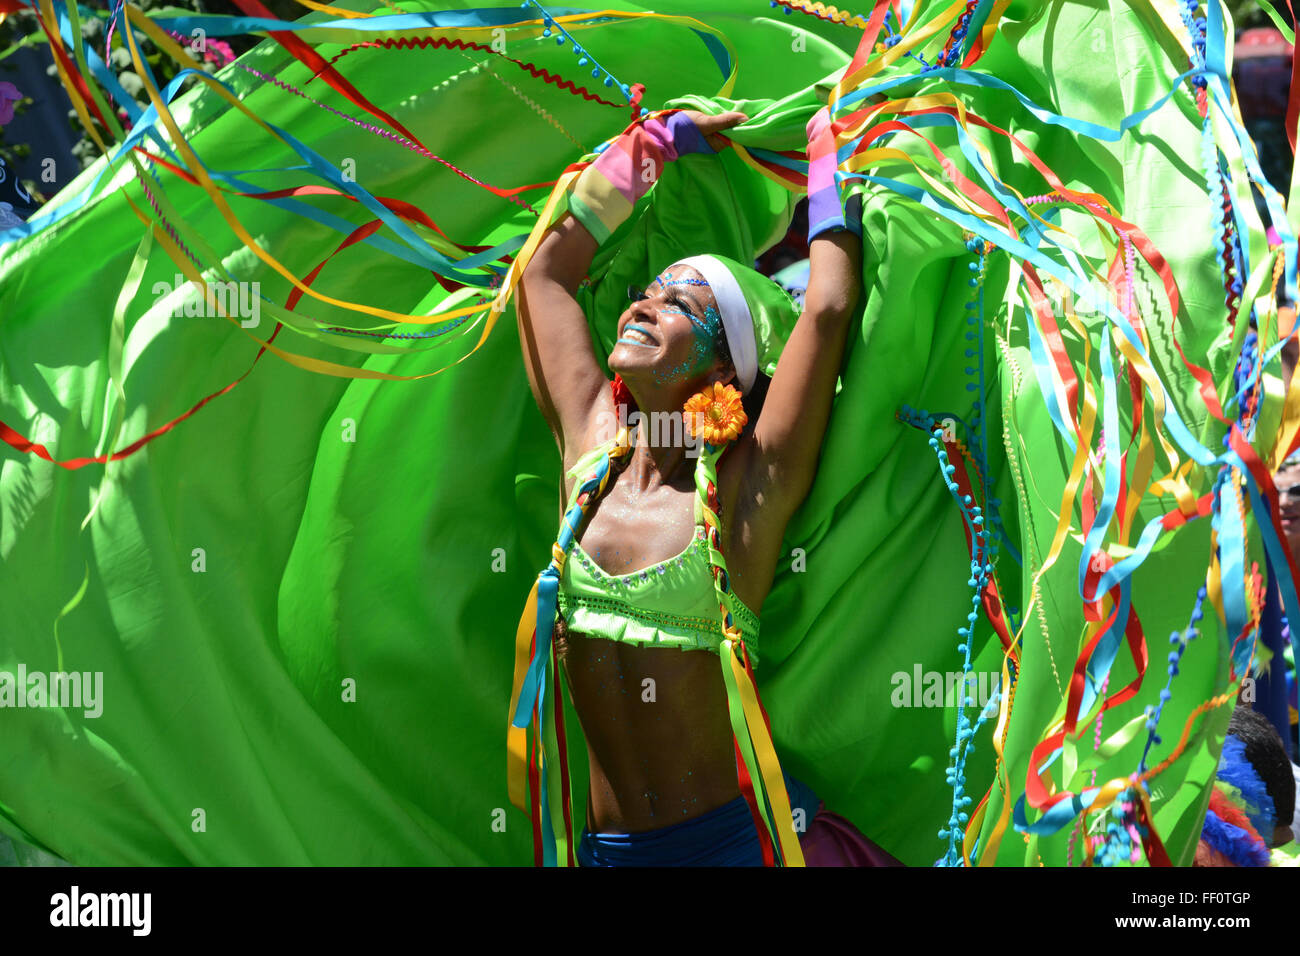 Rio De Janeiro, Brazil. 9th Feb, 2016. A dancer performs in the block street parade 'Bloco das Carmelitas' during the festivities of Carnival in Rio de Janeiro, Brazil, on Feb. 9, 2016. Credit:  Jorge Hely/Brasil Photo Press/AGENCIA ESTADO/Xinhua/Alamy Live News Stock Photo